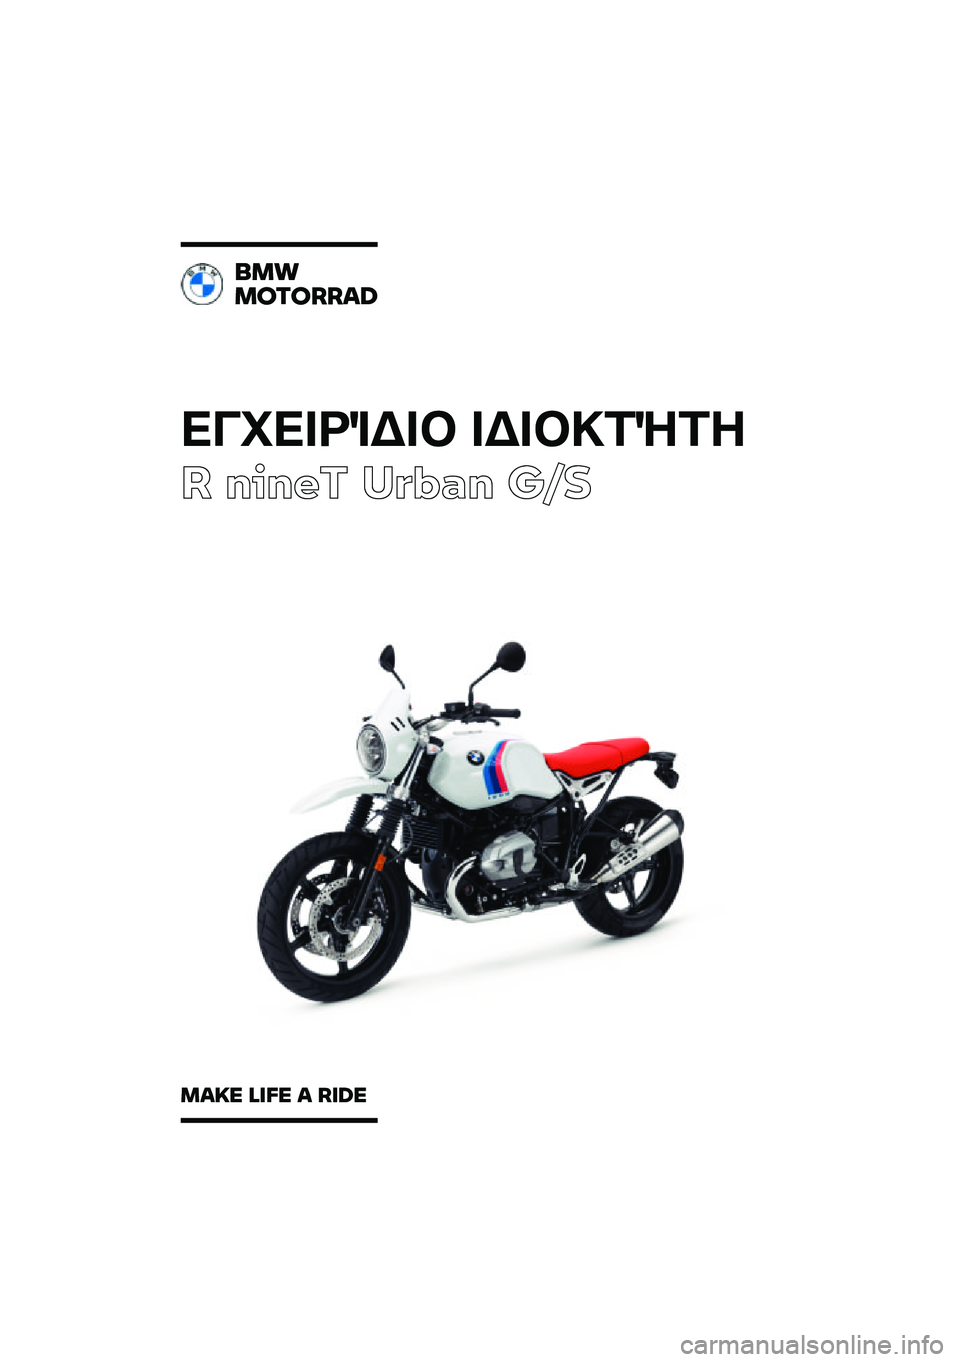 BMW MOTORRAD R NINE T URVAN G/S 2021  Εγχειρίδιο ιδιοκτήτη (in Greek) ��������\b��	 ��\b��	�
��\f��
� ����� ��\b�	�
� ��\f�
���
�������\b�	
��\b�
� �\f�
�� �\b ��
�	� 